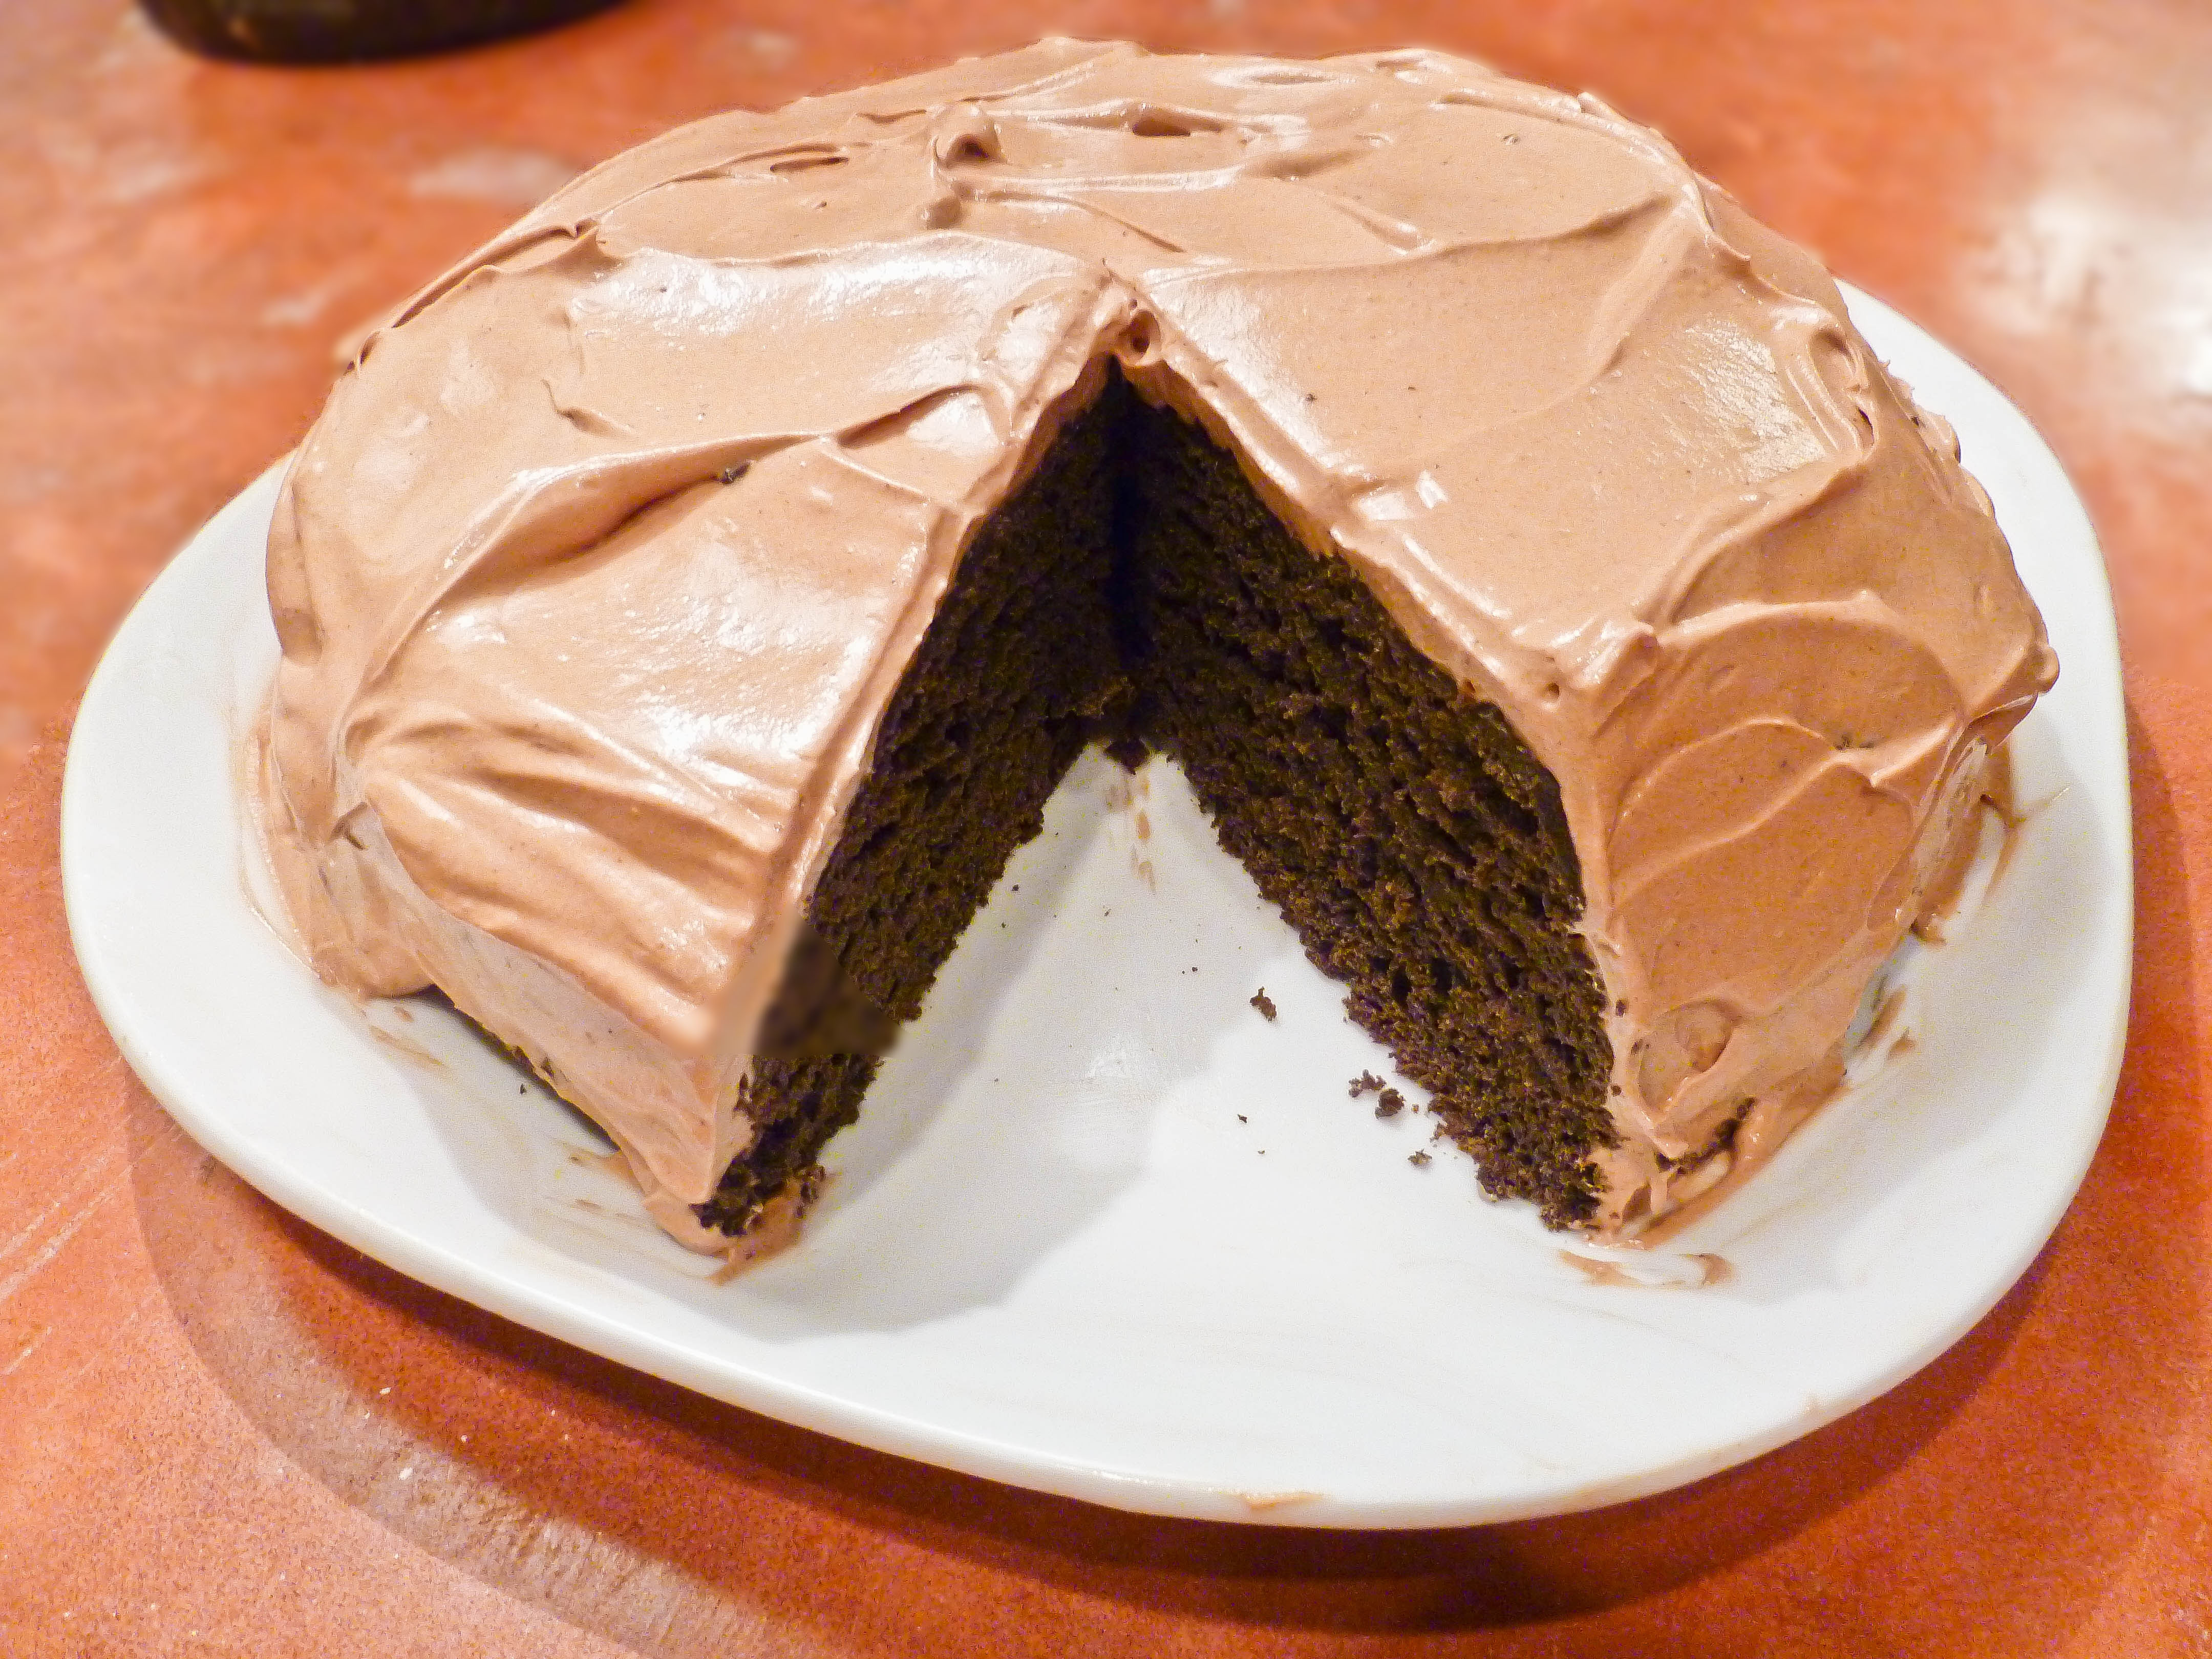 Chocolate Pumpkin Cake with Chocolate Cream Frosting